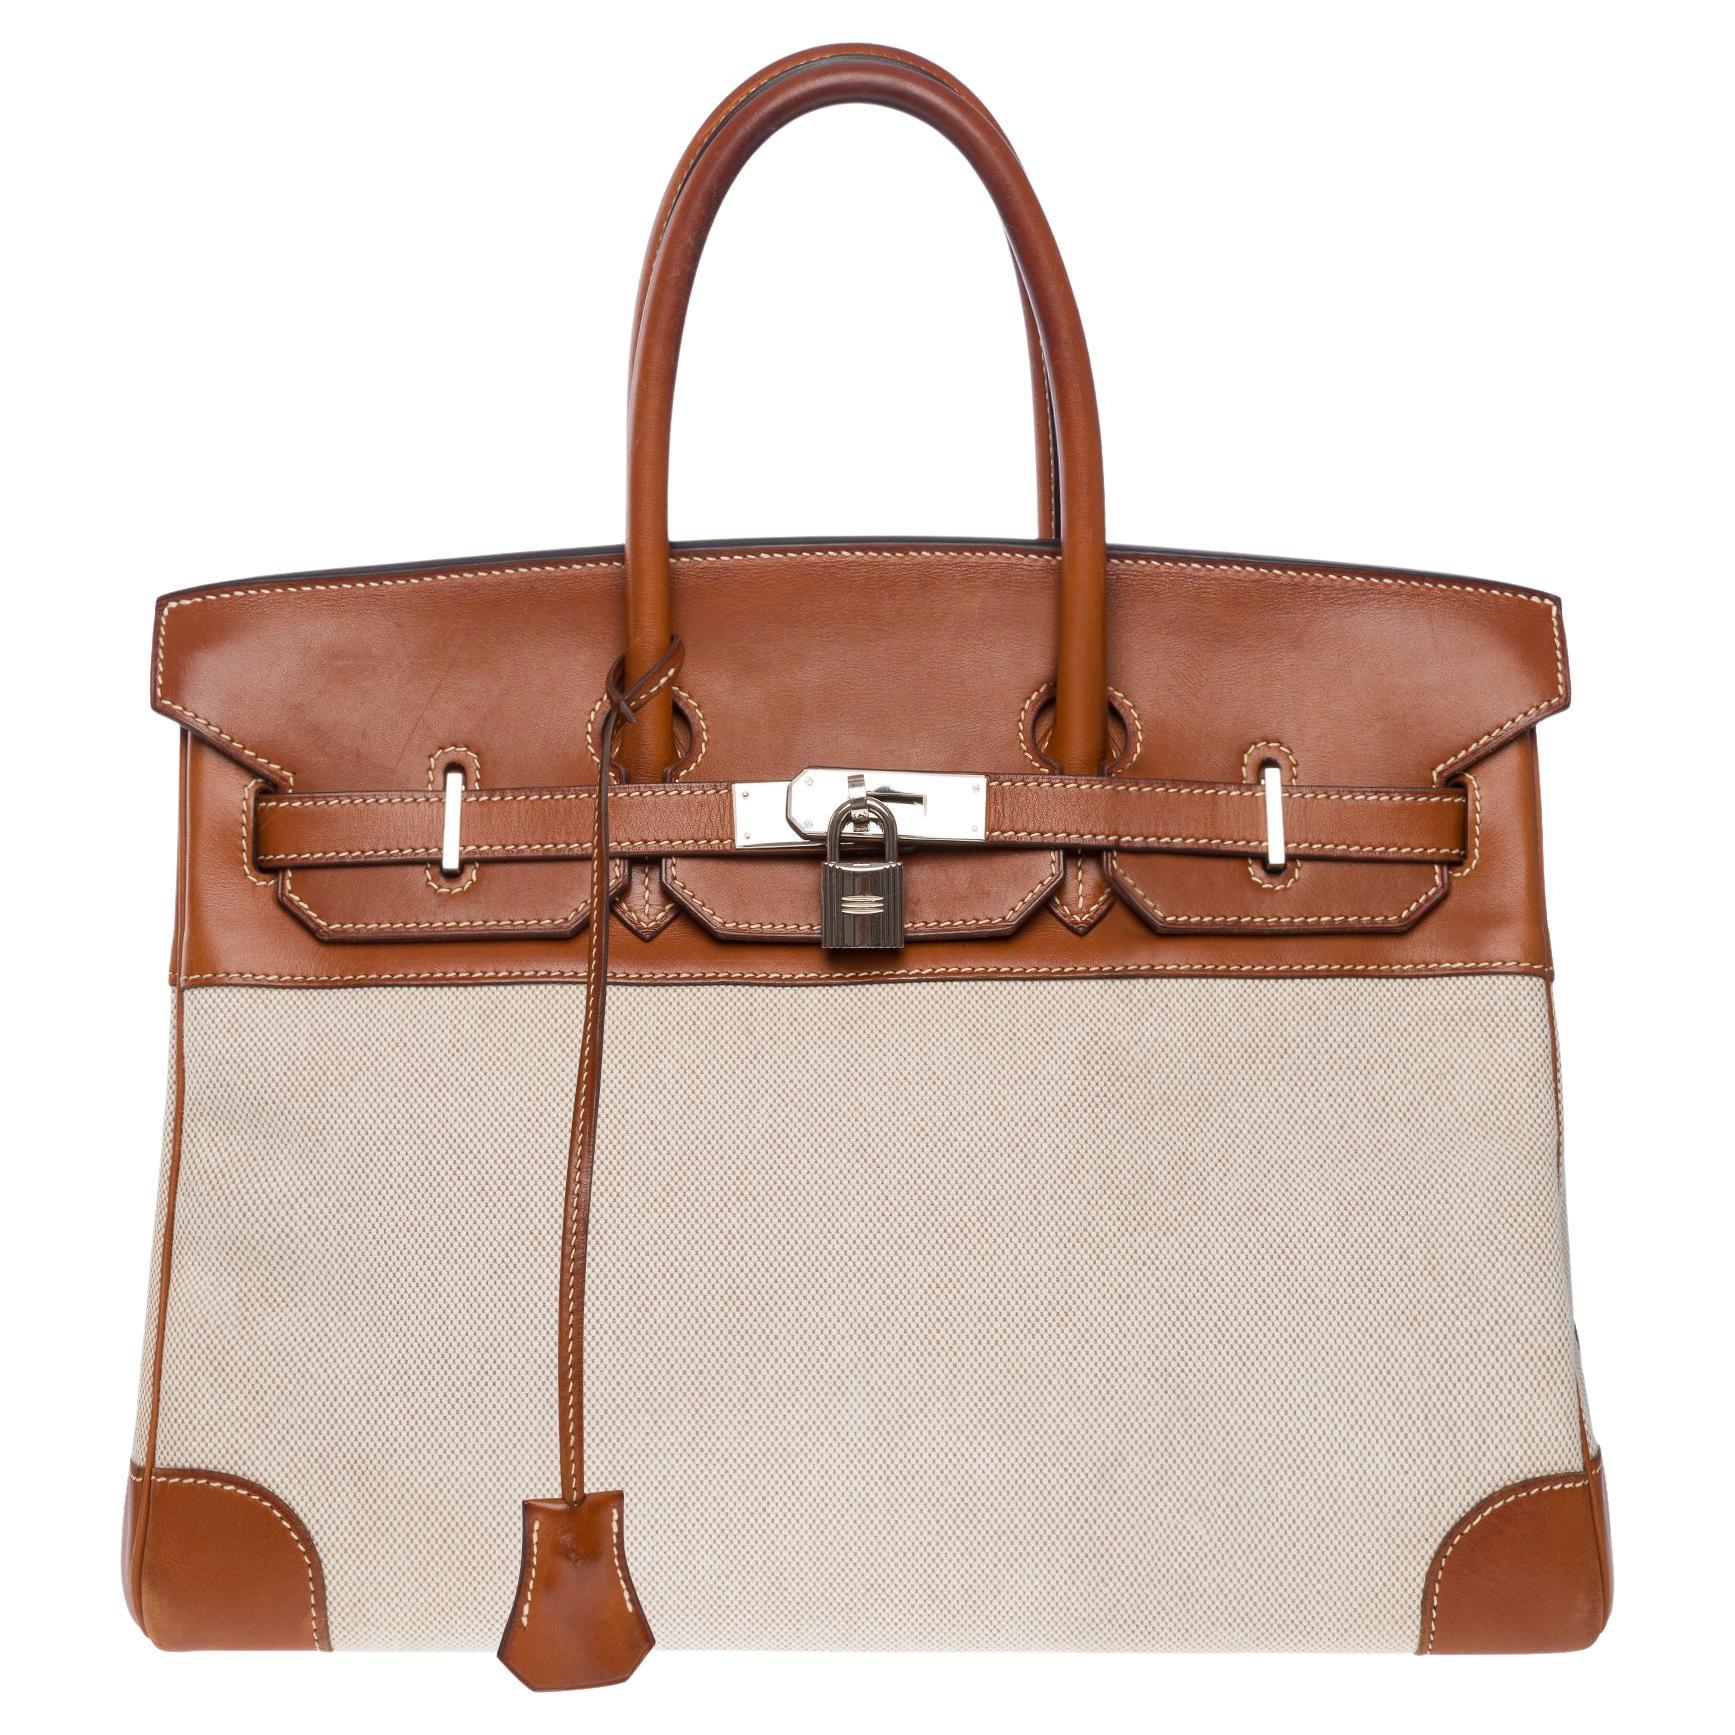 Fantastic Hermès Birkin 35 handbag in brown Barenia leather & Beige Canvas, SHW